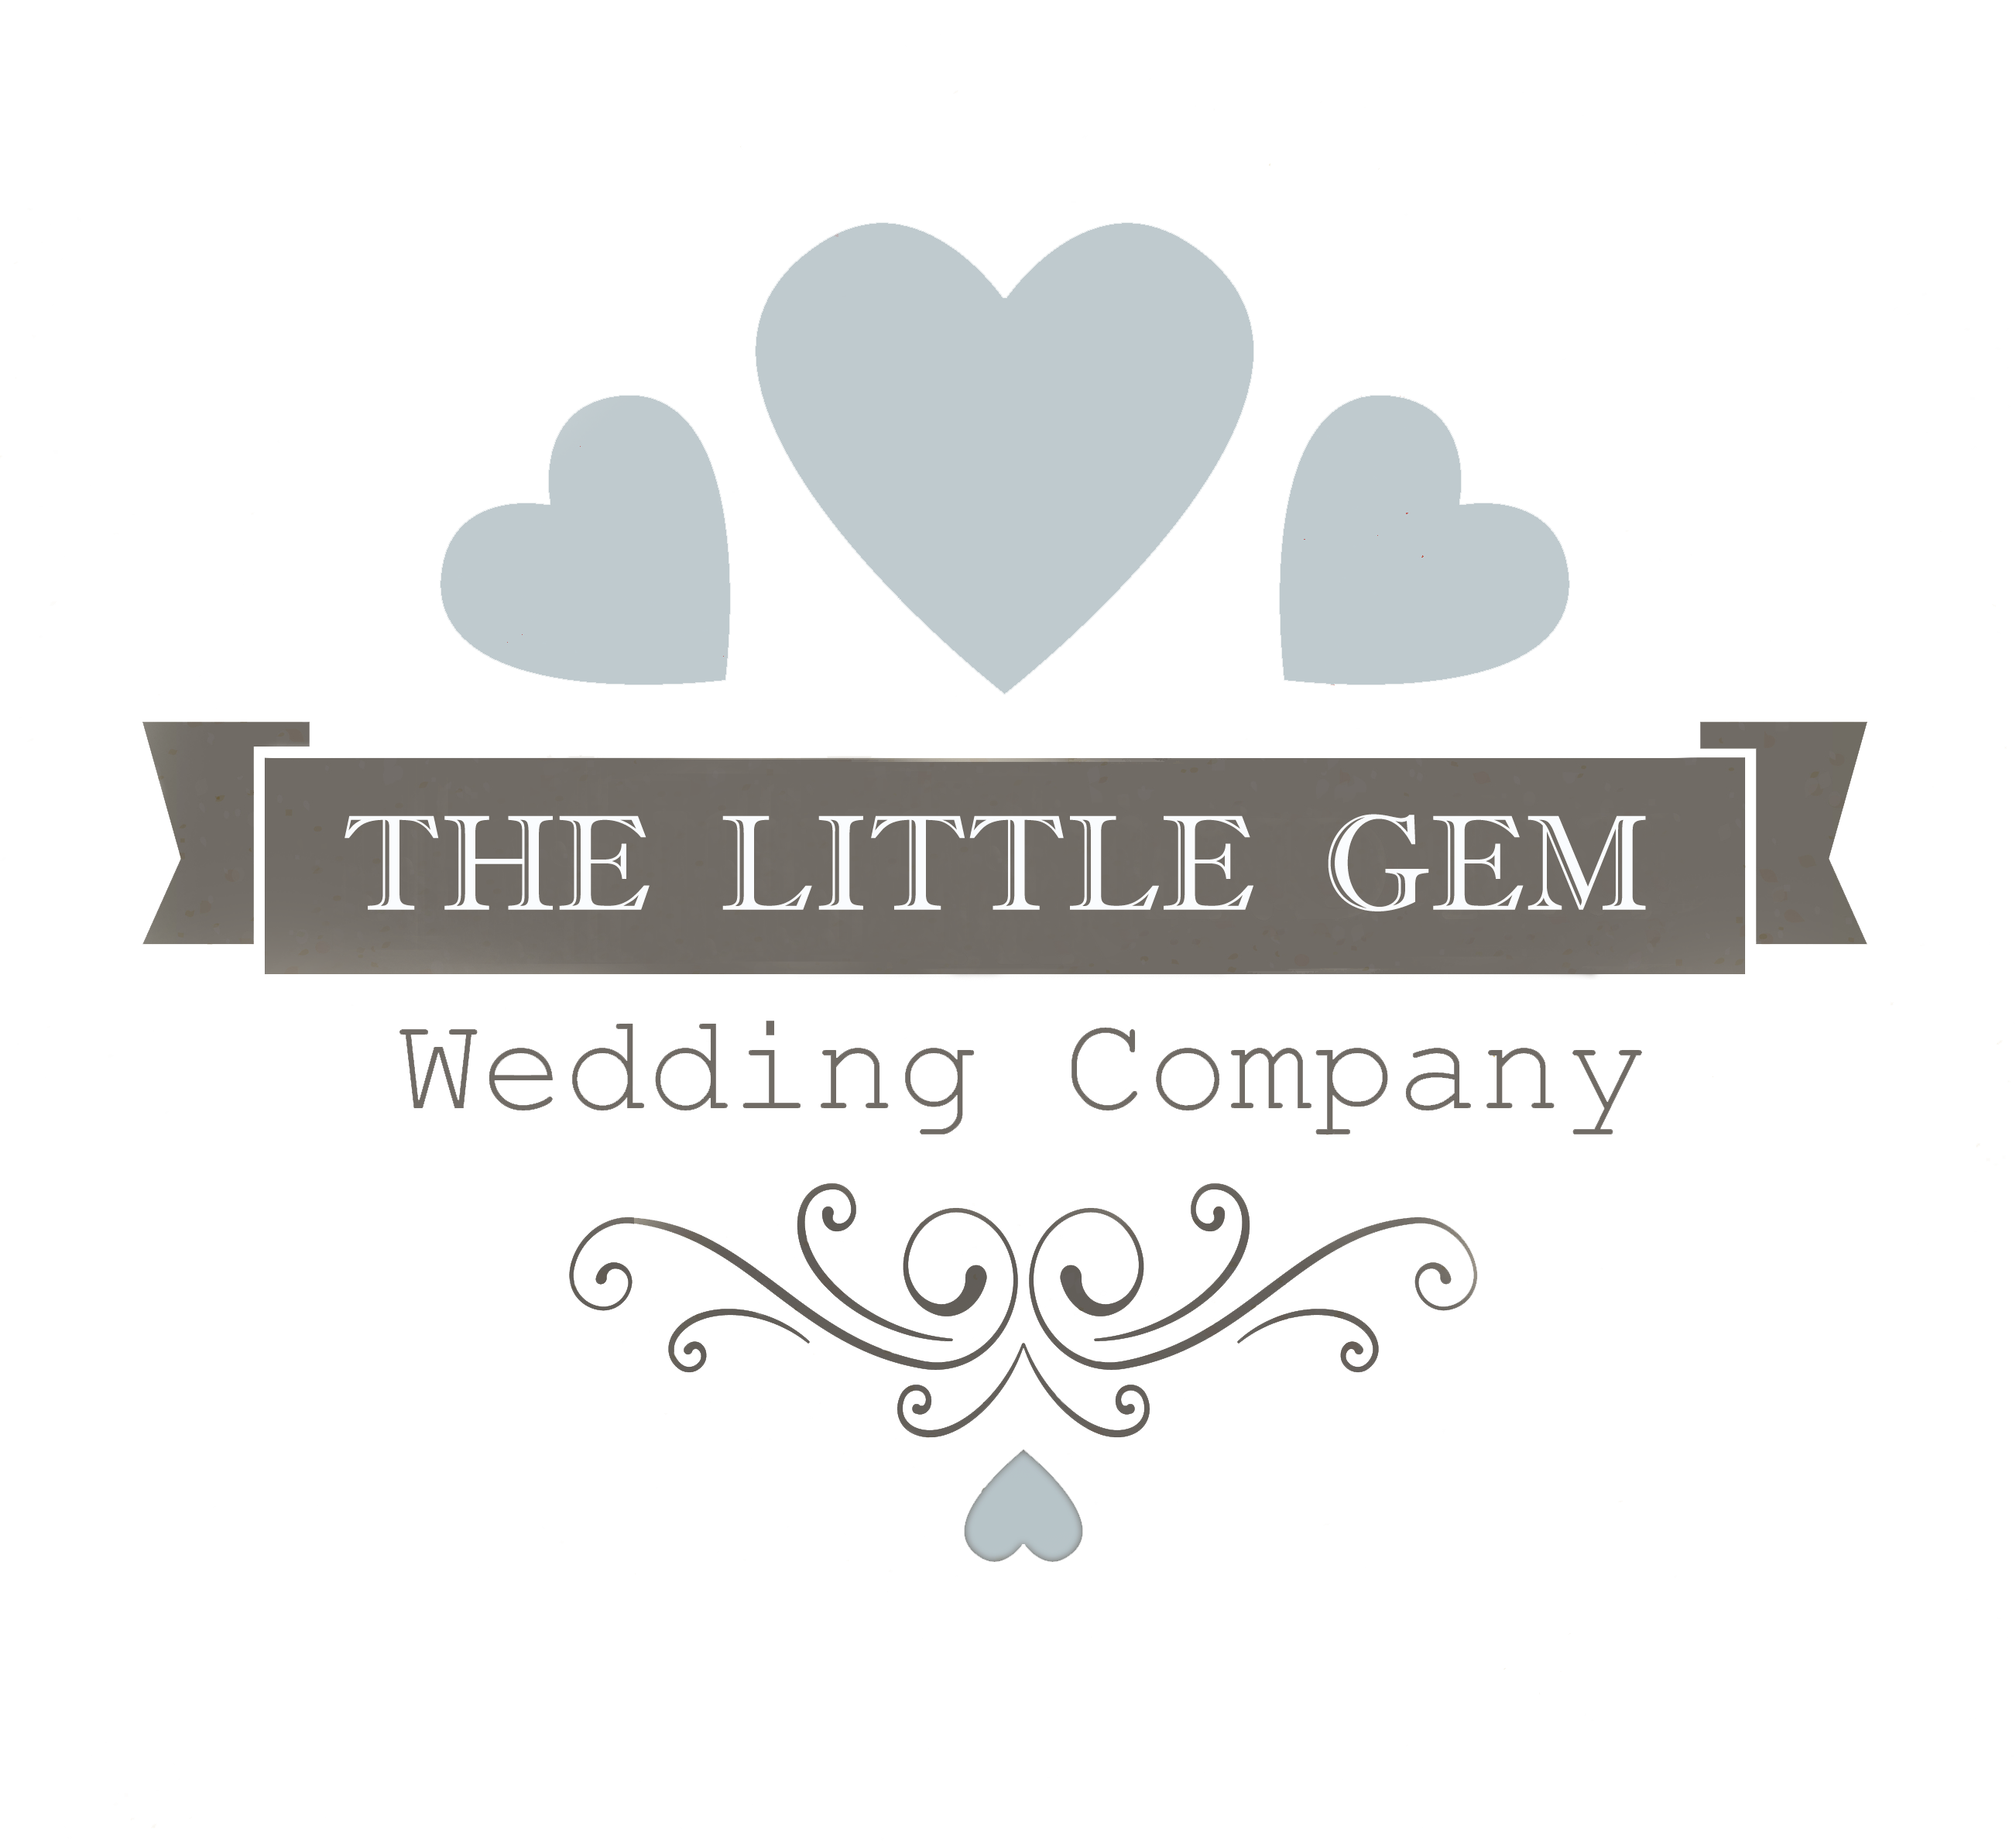 The Little Gem Wedding Company